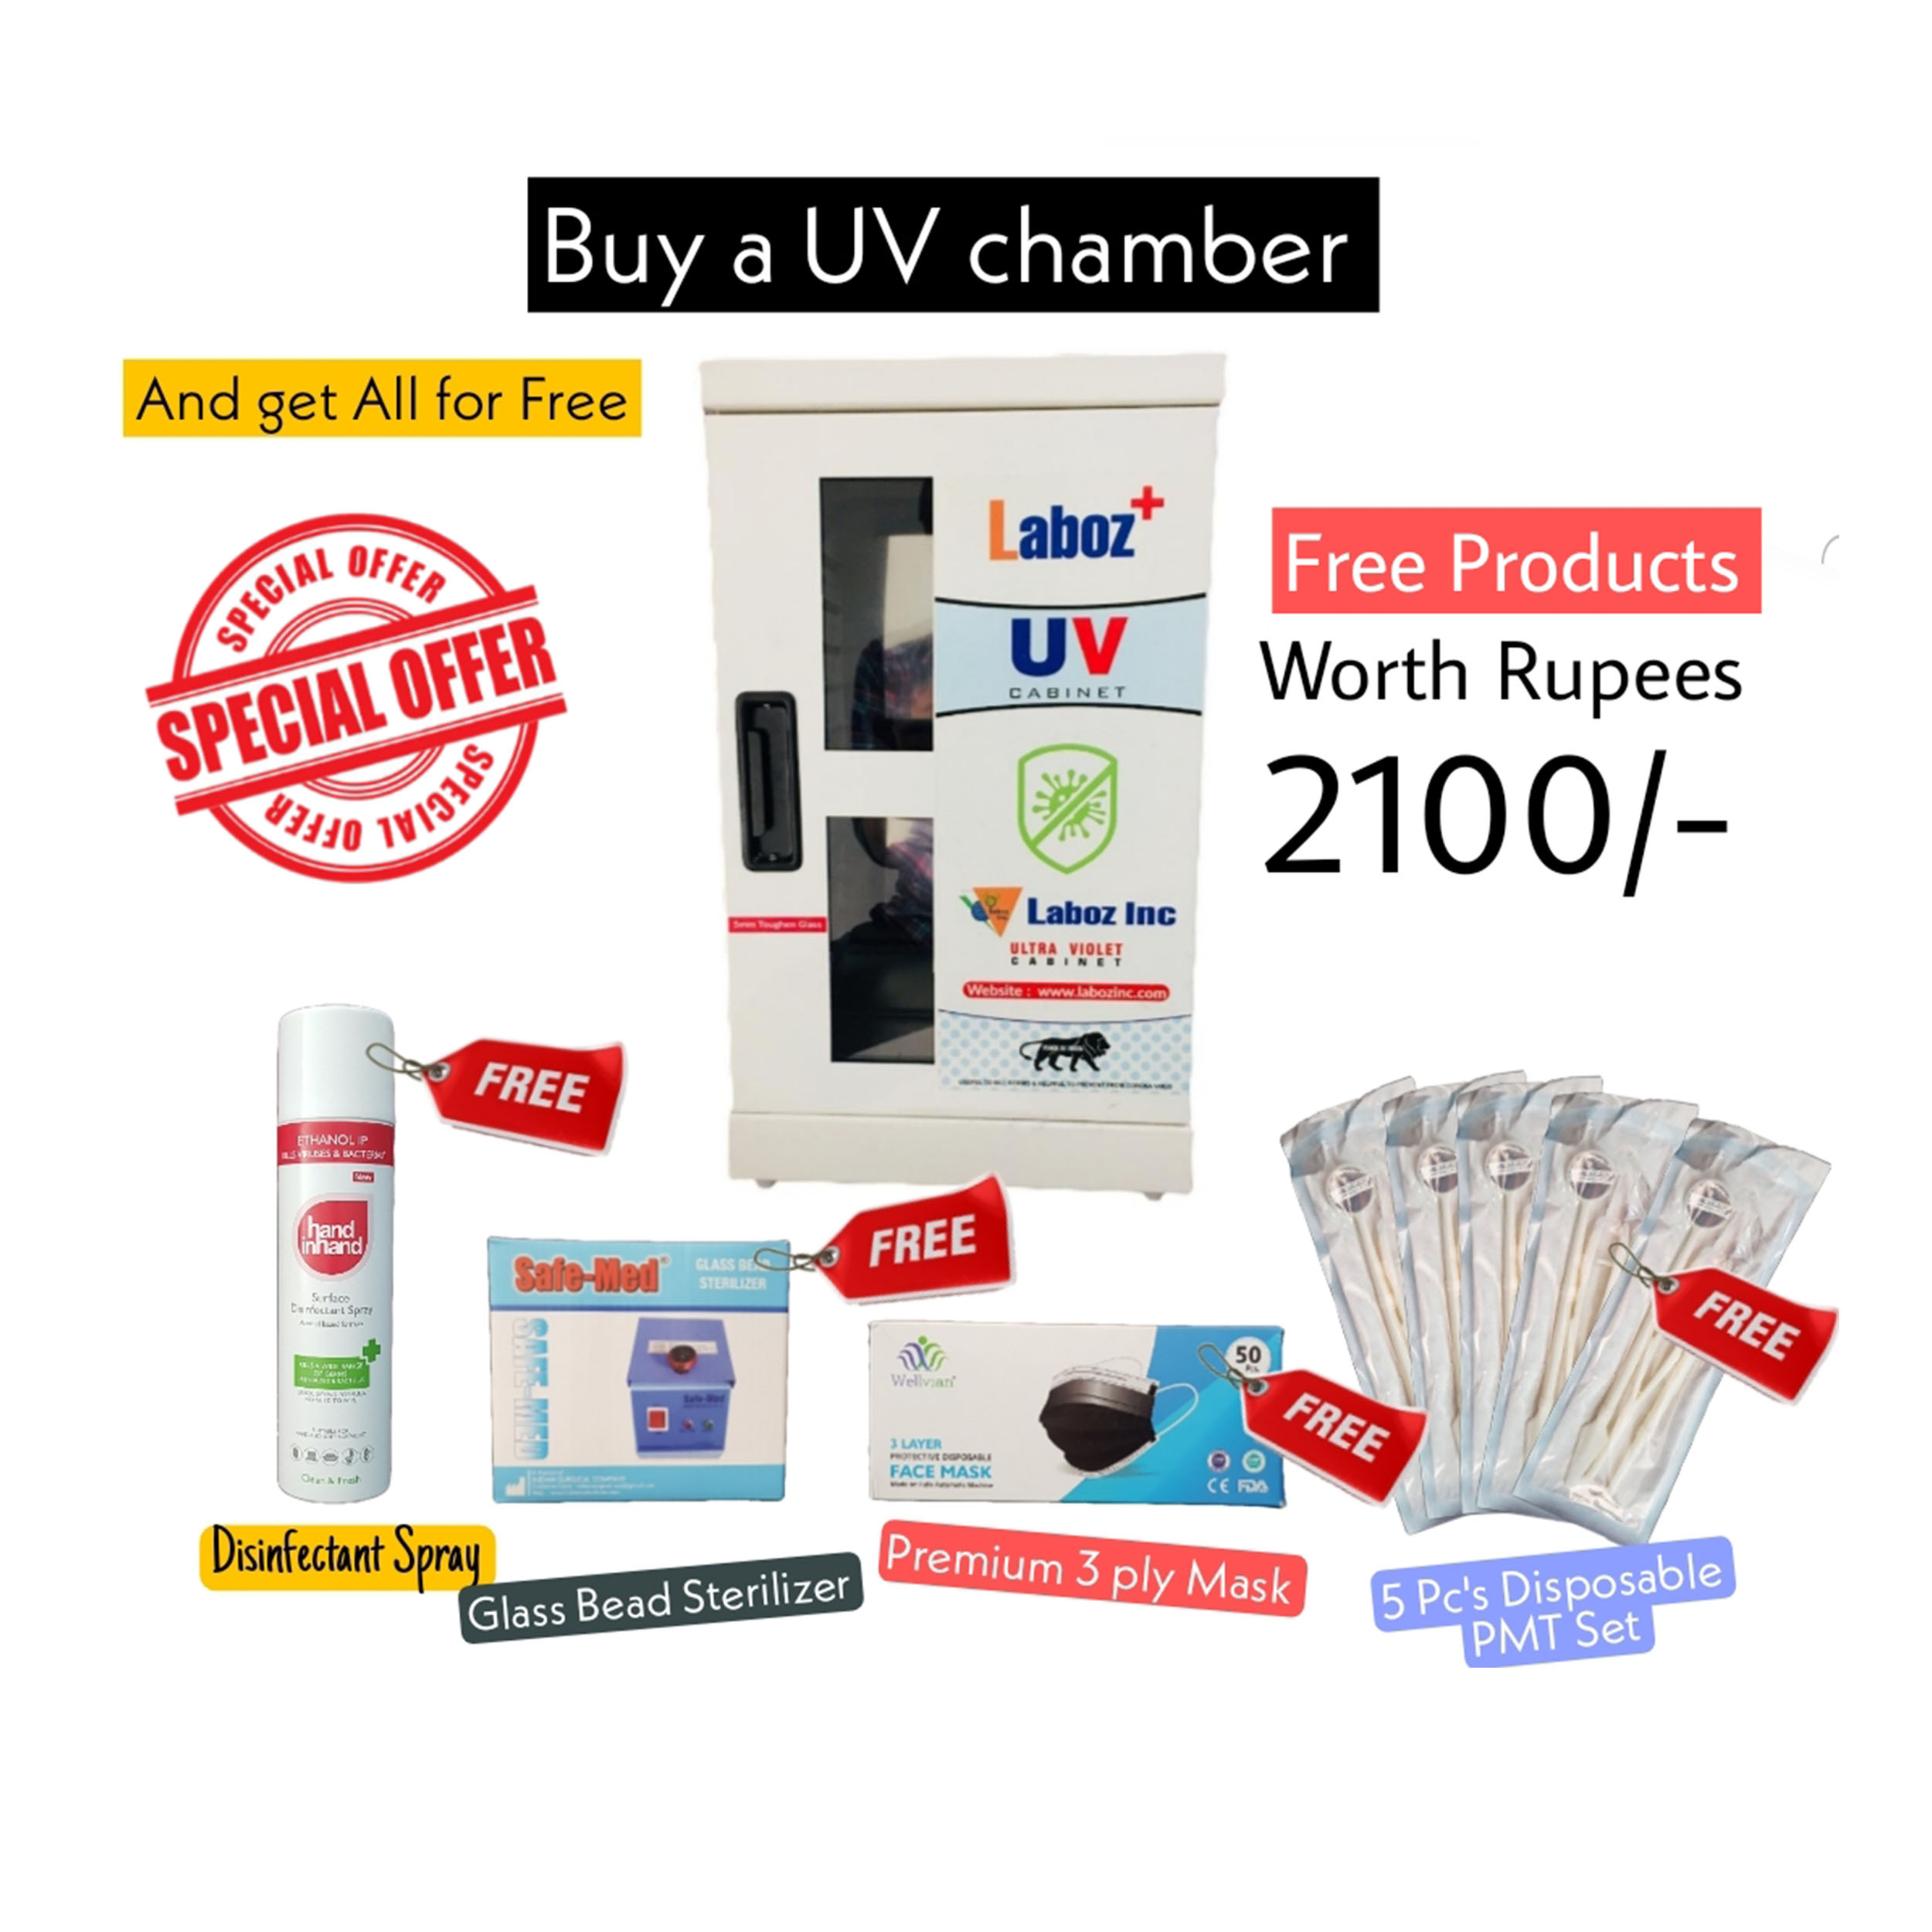 LABOZ PLUS UV Chamber (1) + Disposable PMT set (5) +3 Ply Mask (1) +Glass Bead Sterilizer (1) + Surface Disinfectant (1)